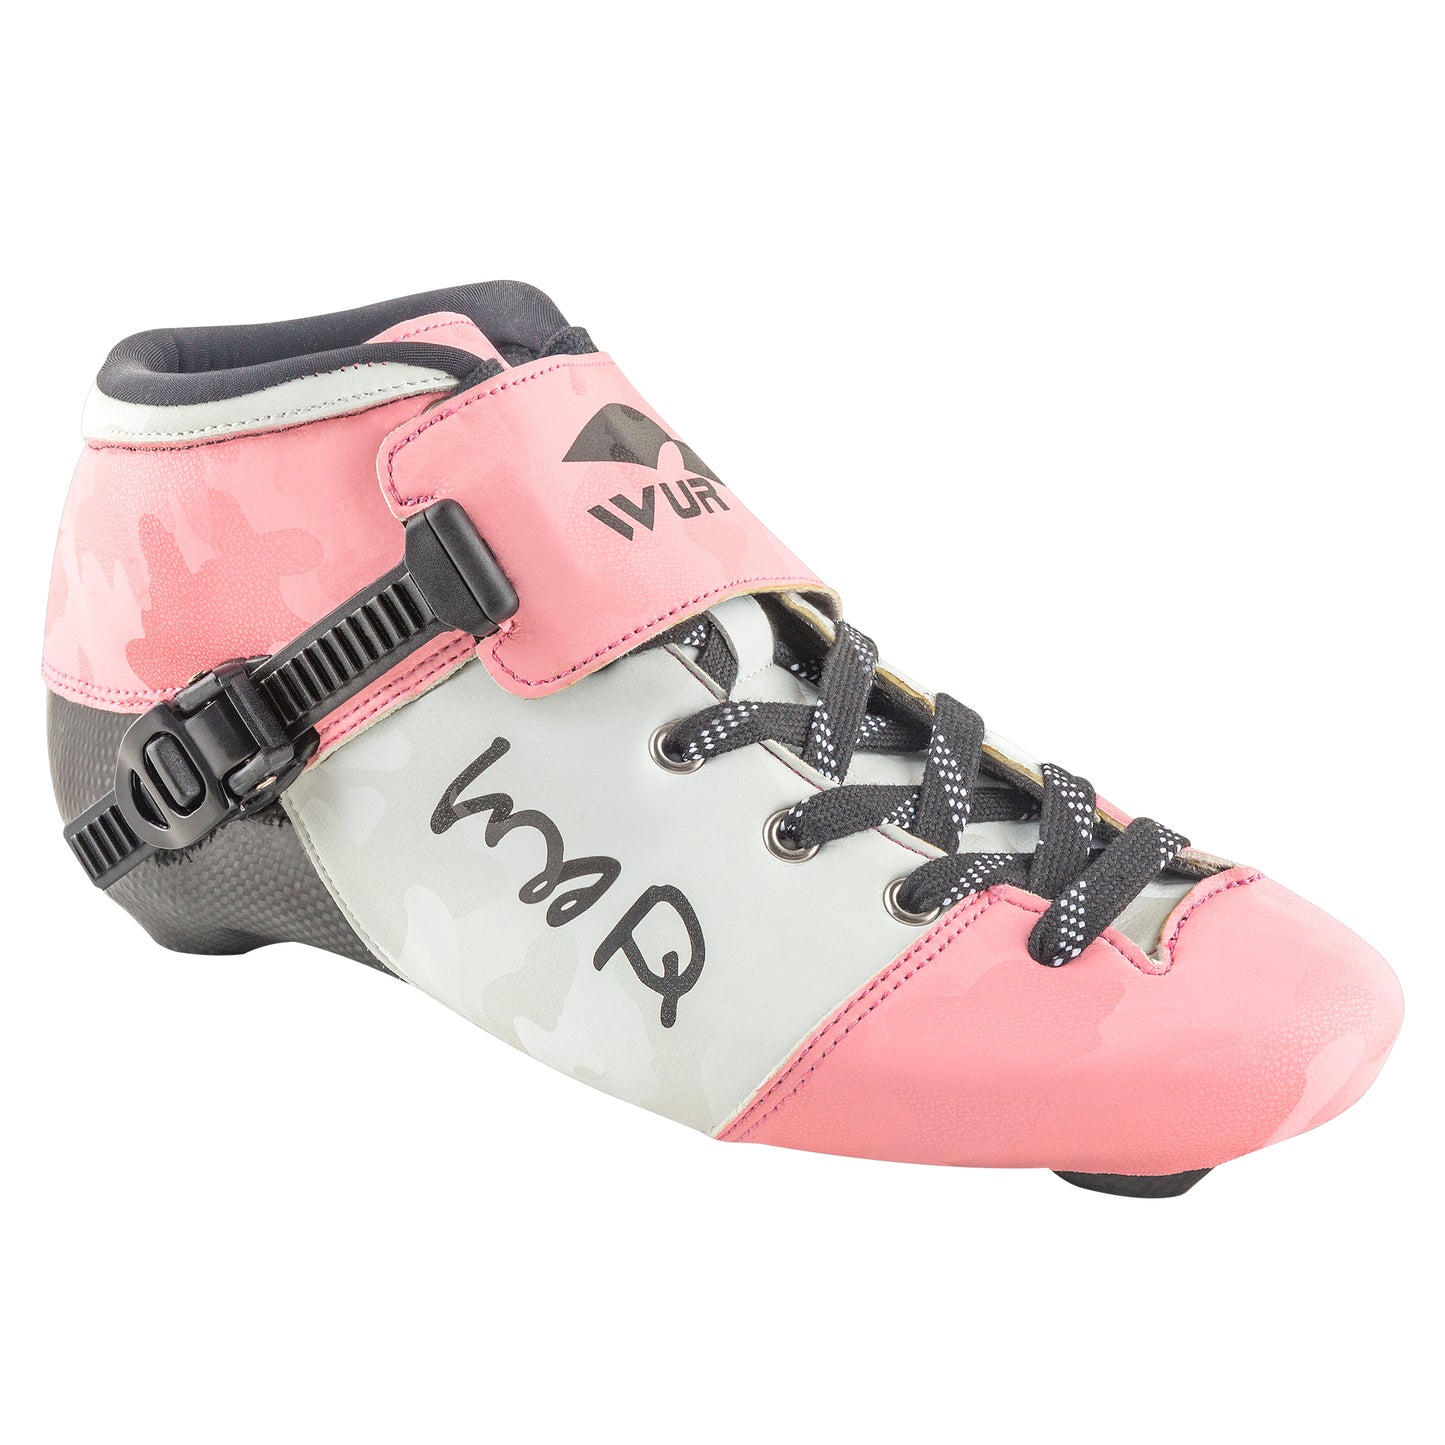 ZQ speed skate boots pink